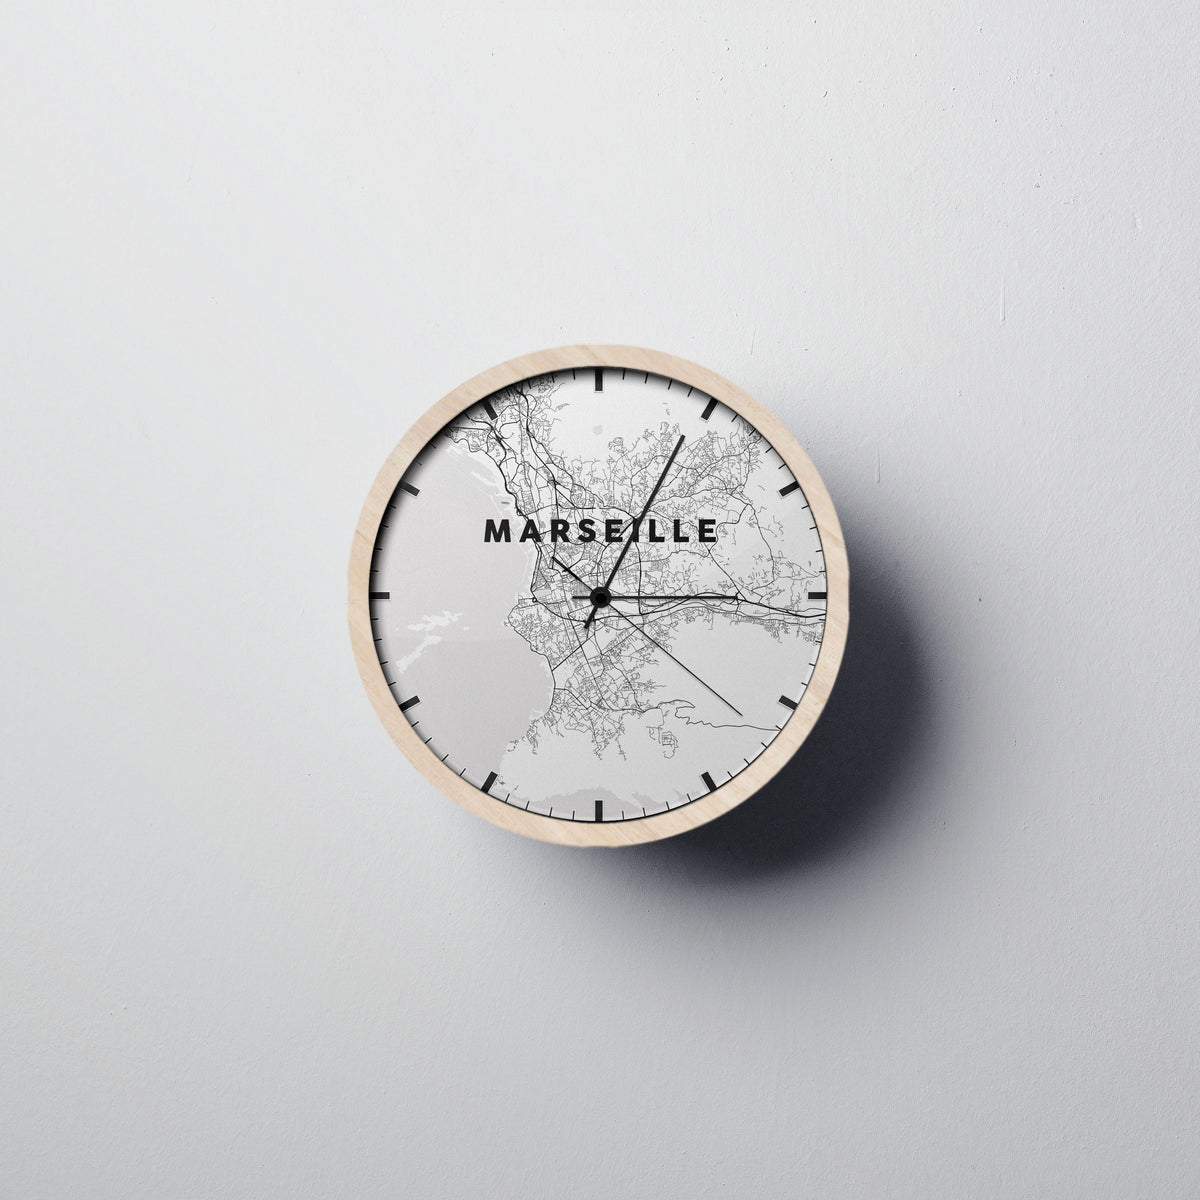 Marseille Wall Clock